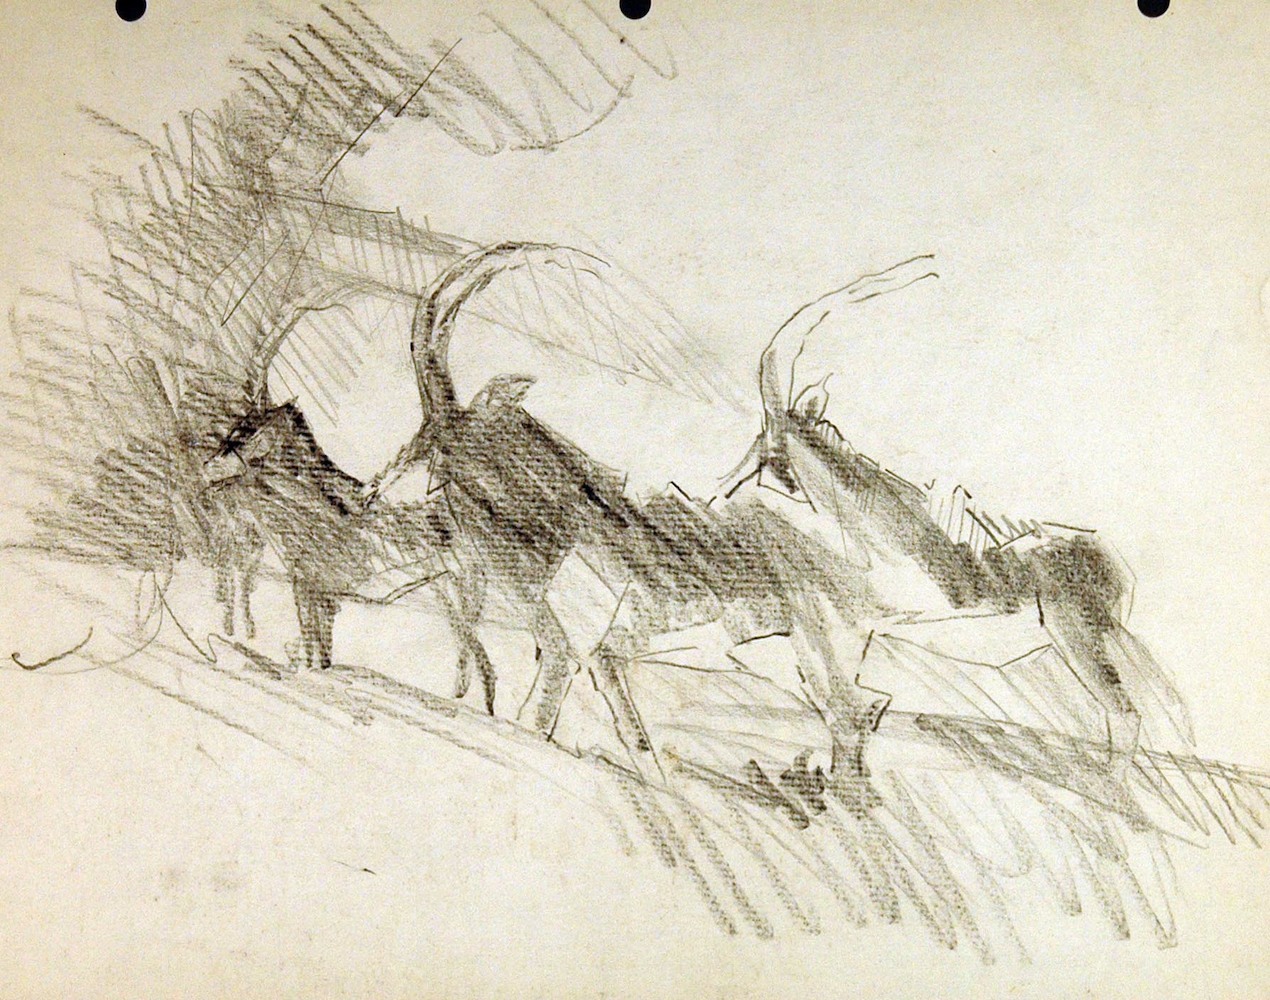 Antelopes, a Group of Three